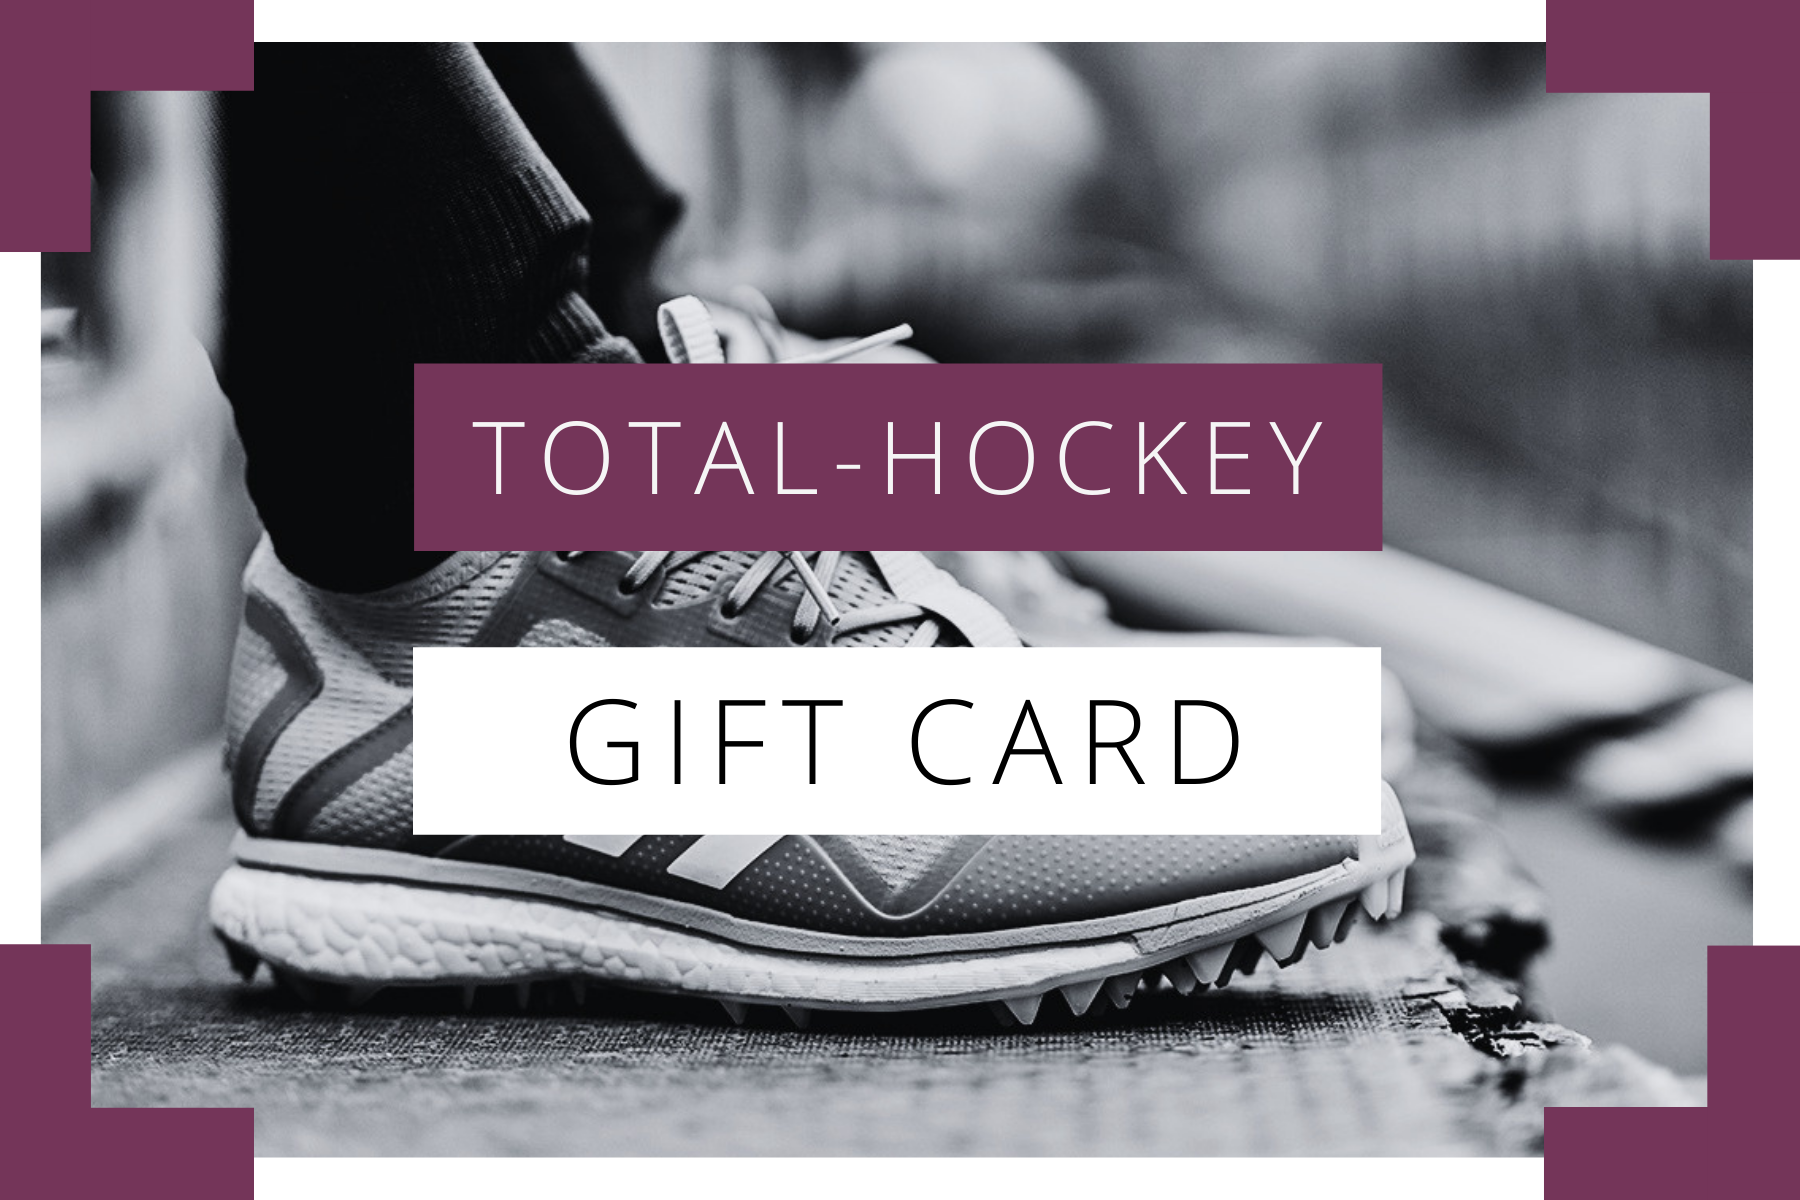 Total-Hockey Gift Card